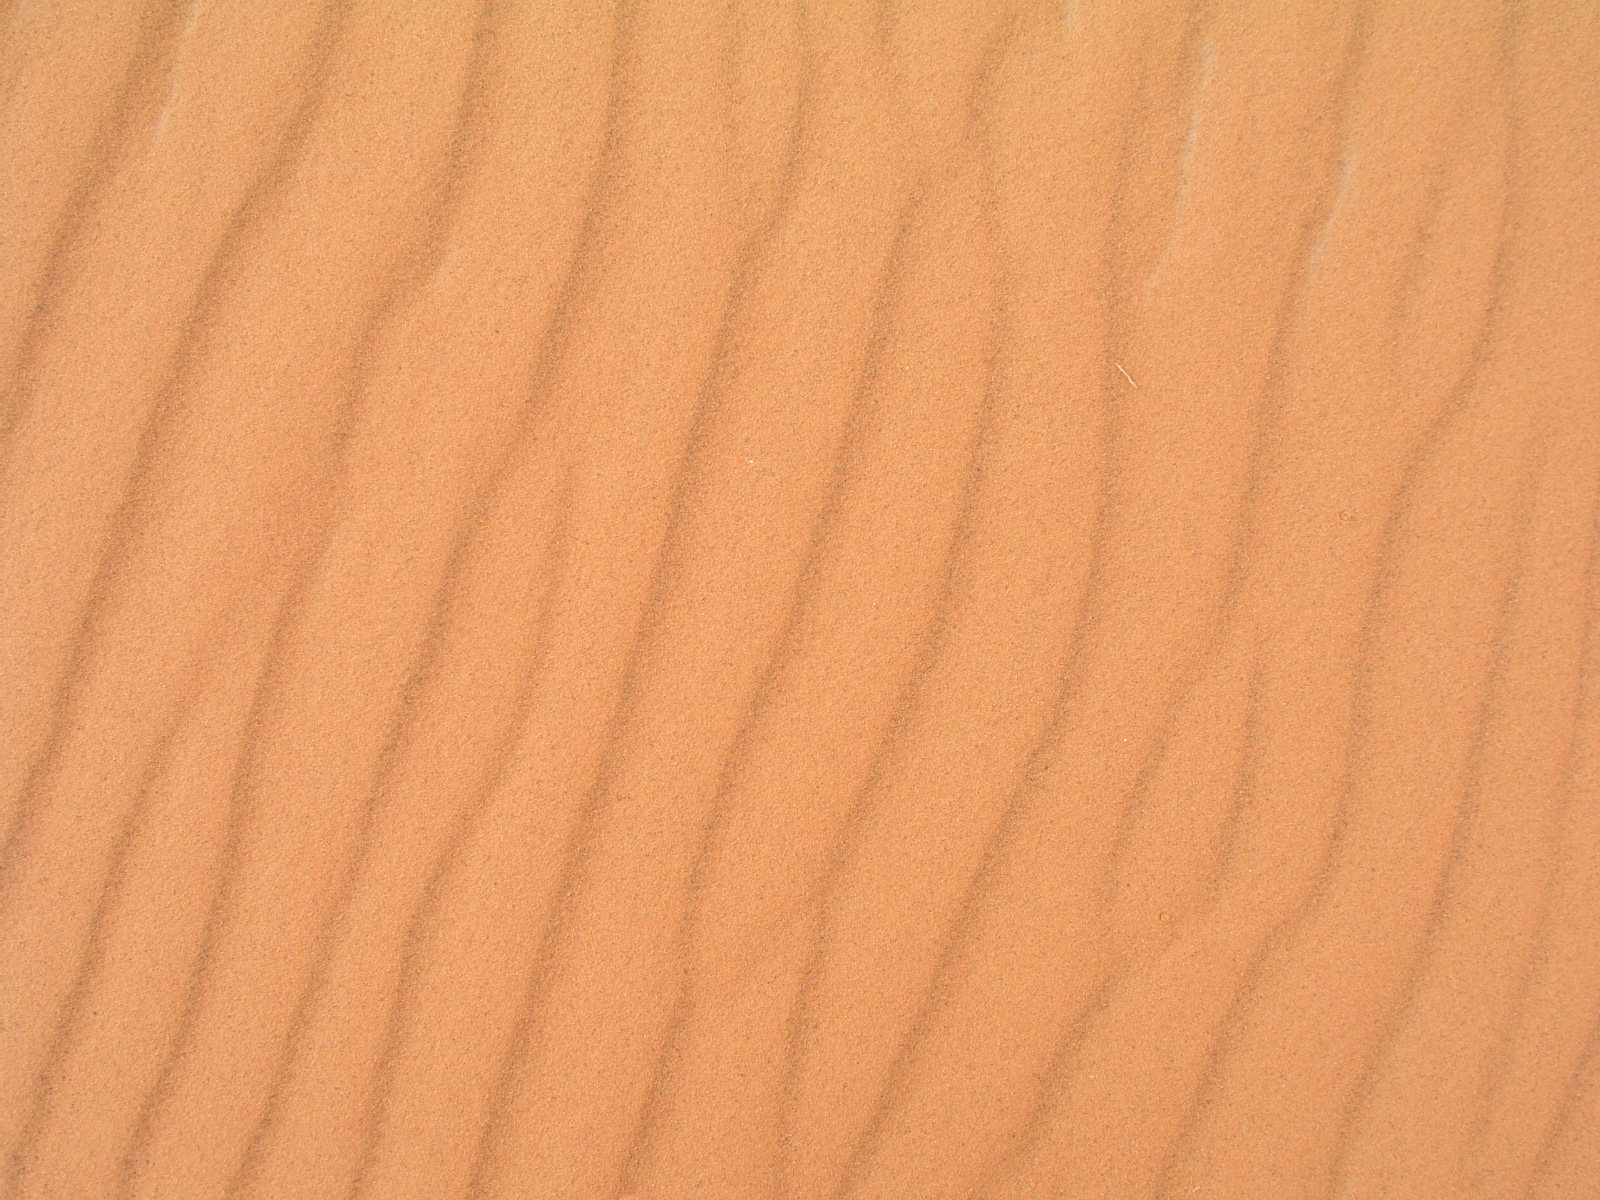 sand, texture, download